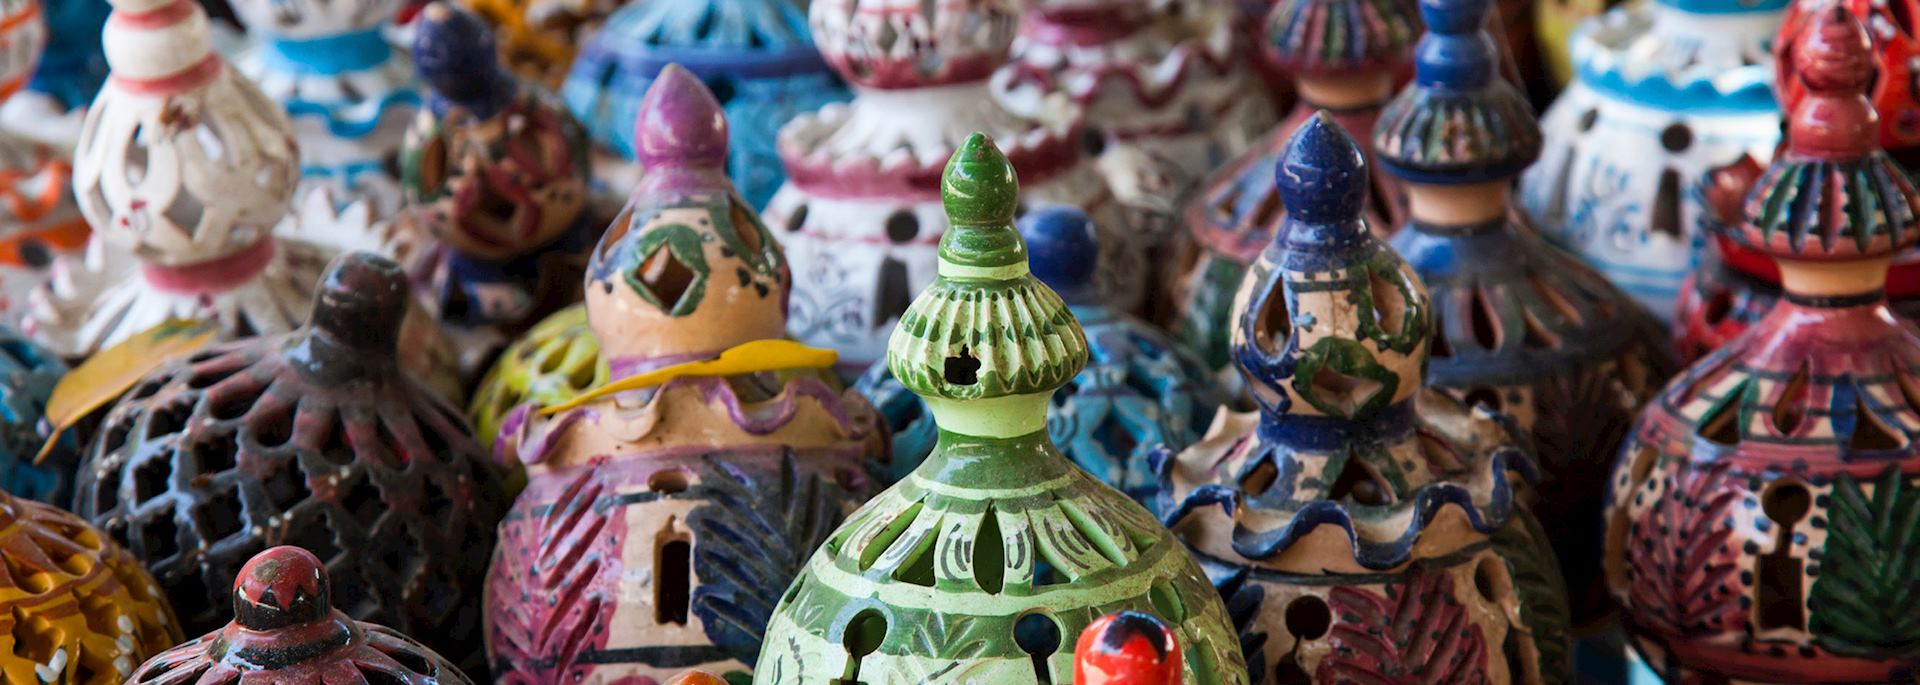 Tunisian lamps in a market, Jerba